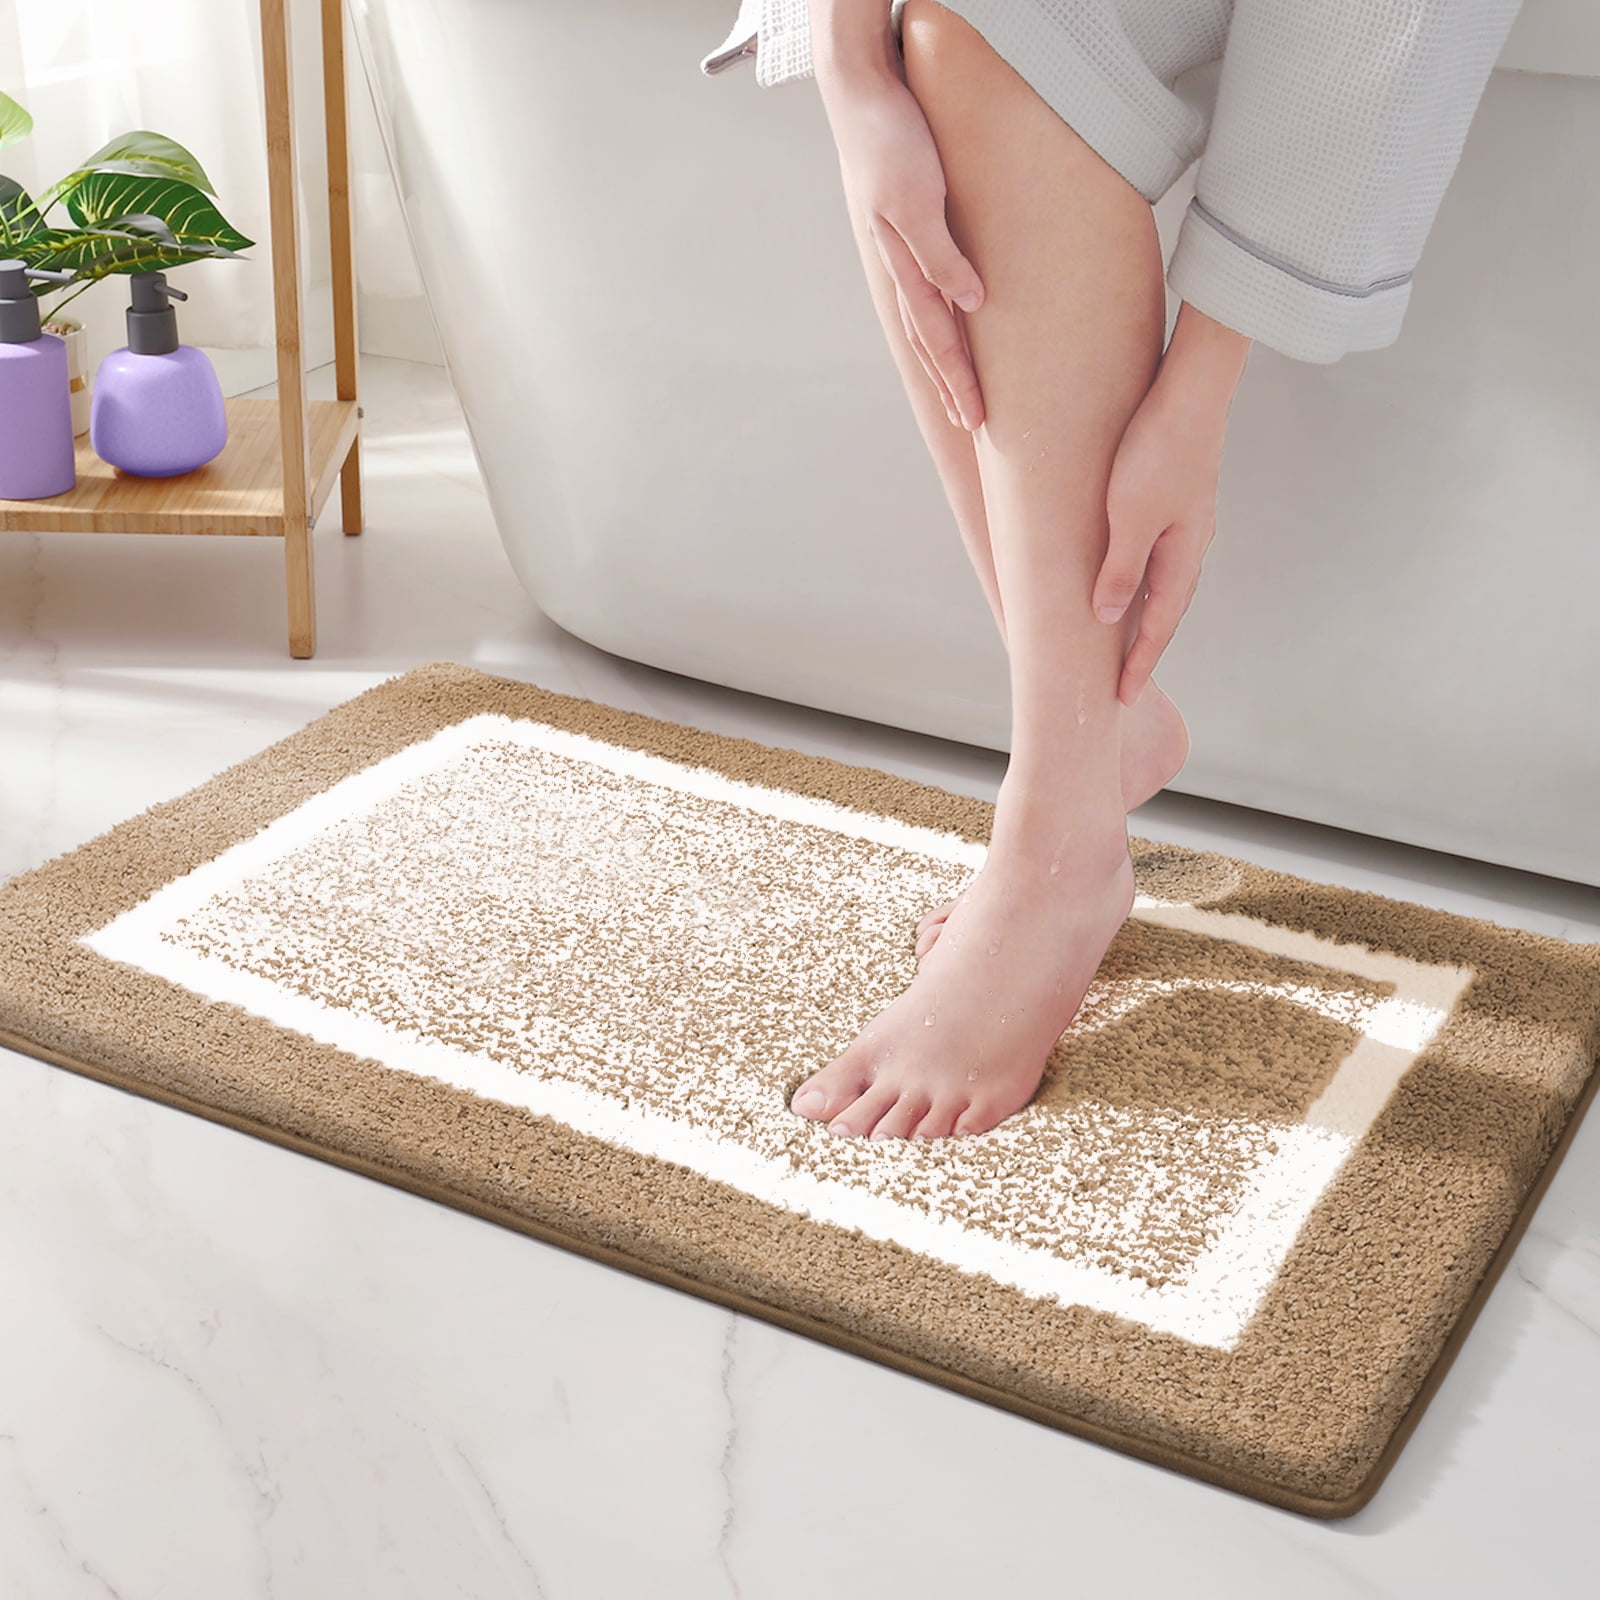 InterDesign iDry Microfiber Shower and Bath Mat for Bathroom Floor X-La Bronze 